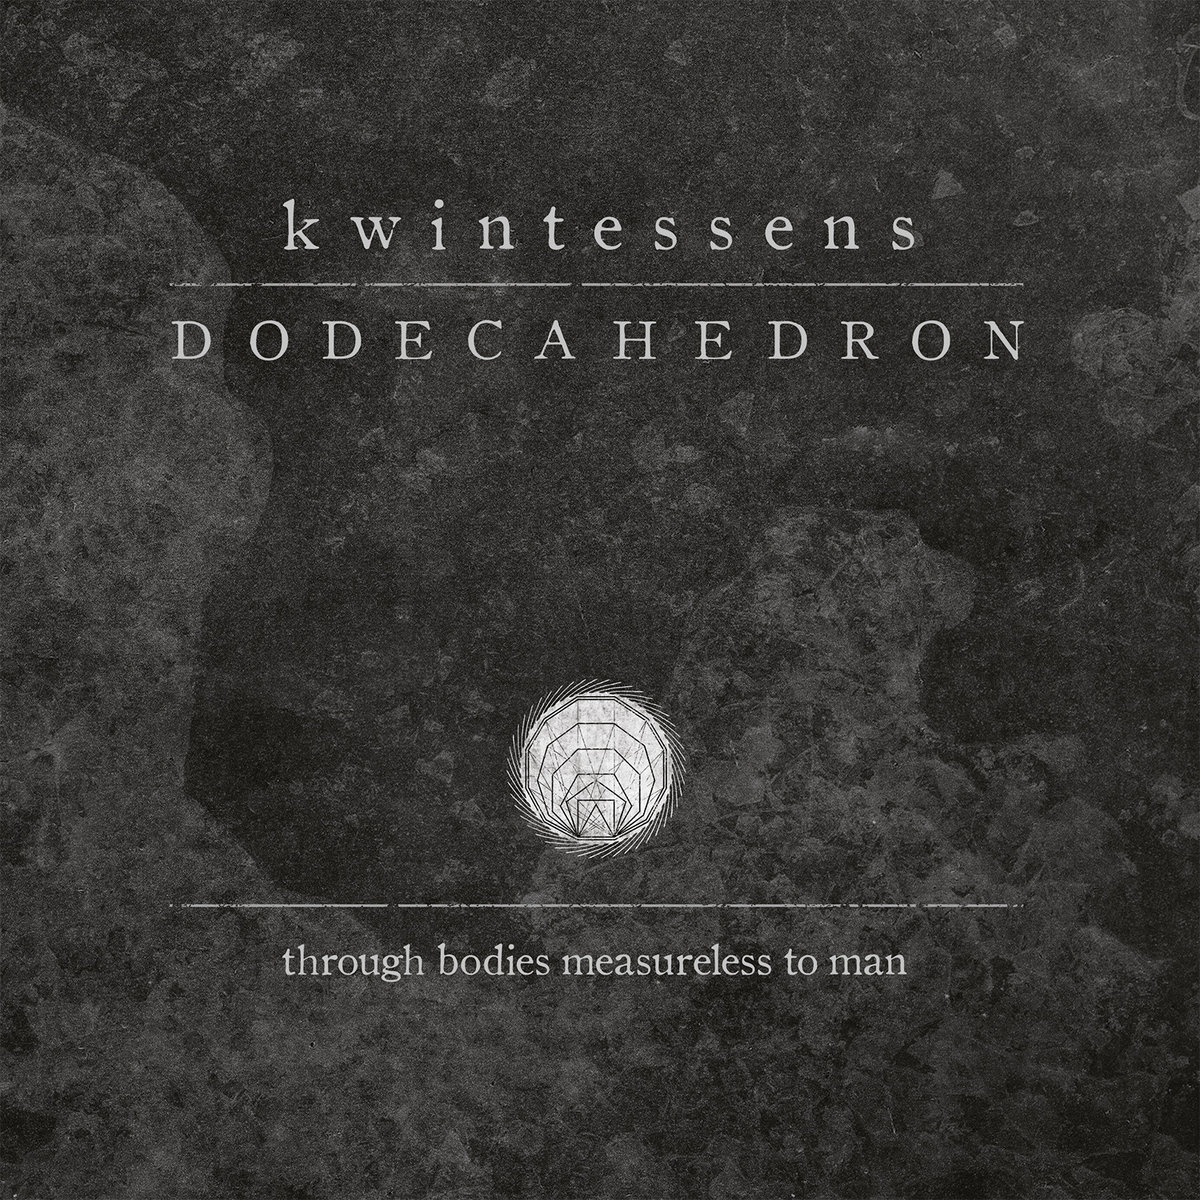 Dodecahedron – Kwintessens Album